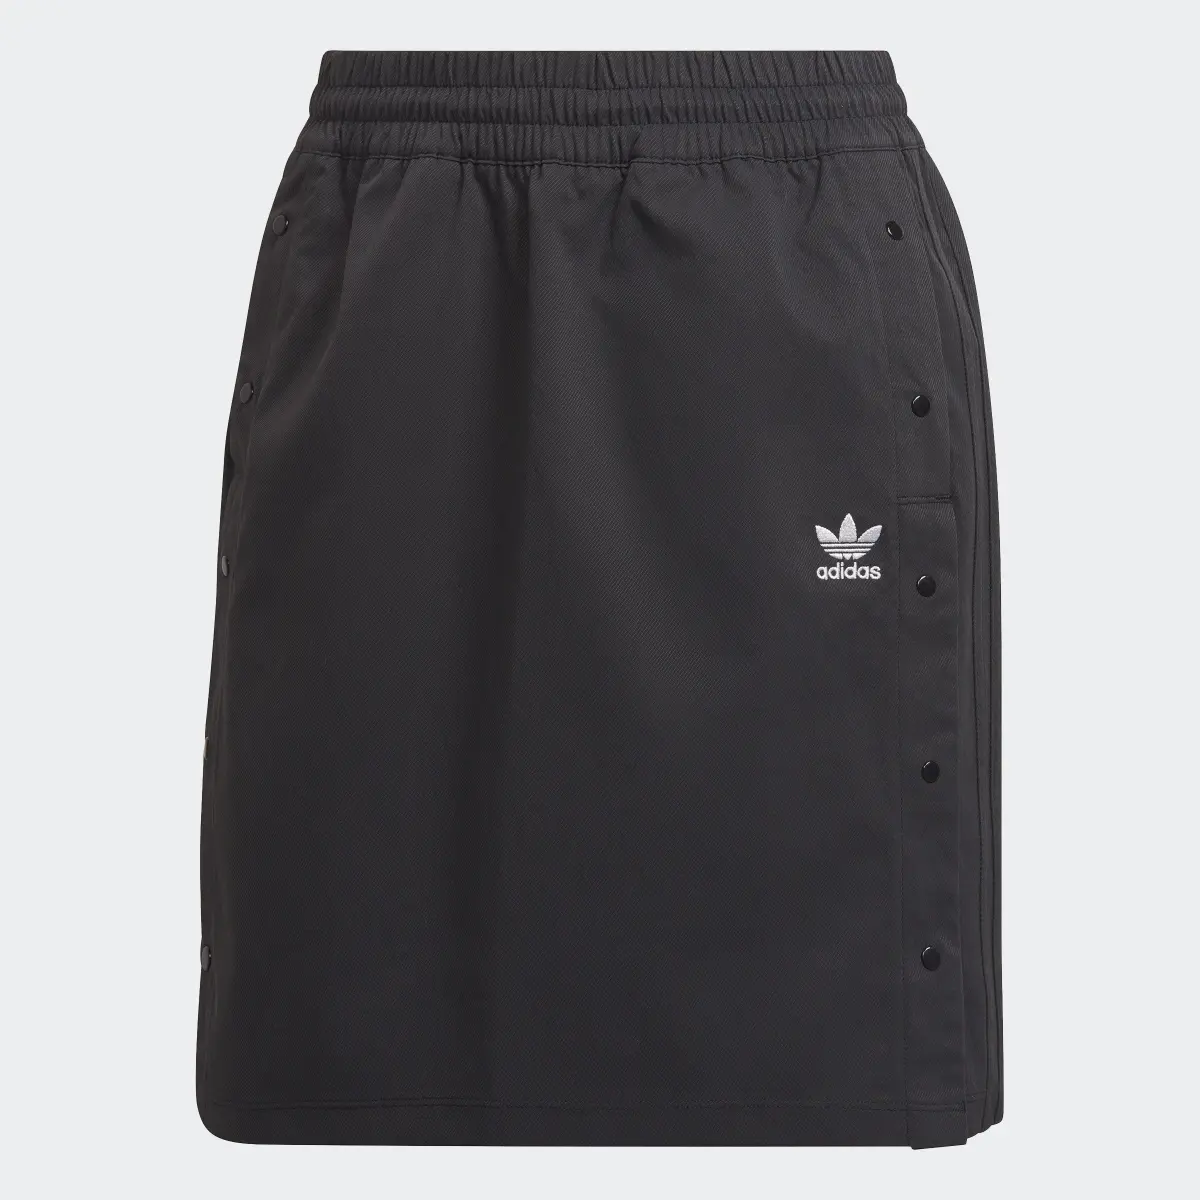 Adidas Always Original Snap-Button Skirt. 3